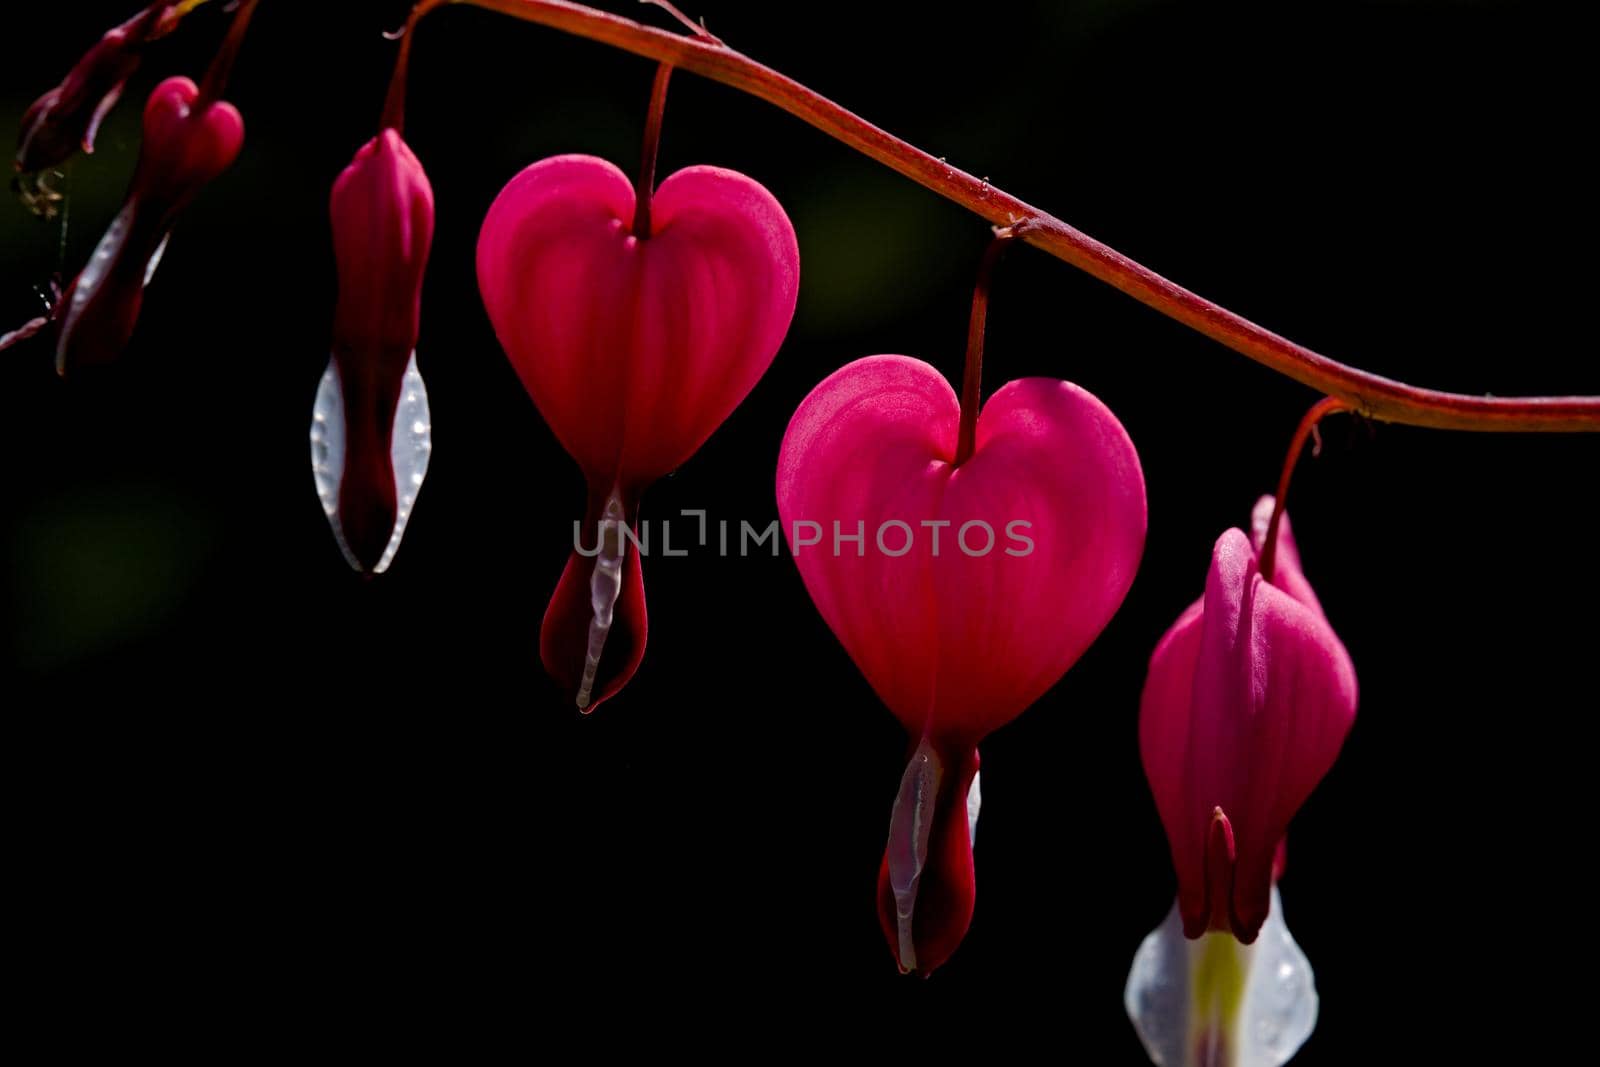 Pink bleeding-heart shaped flowers, macro close up, dark background by RhysL